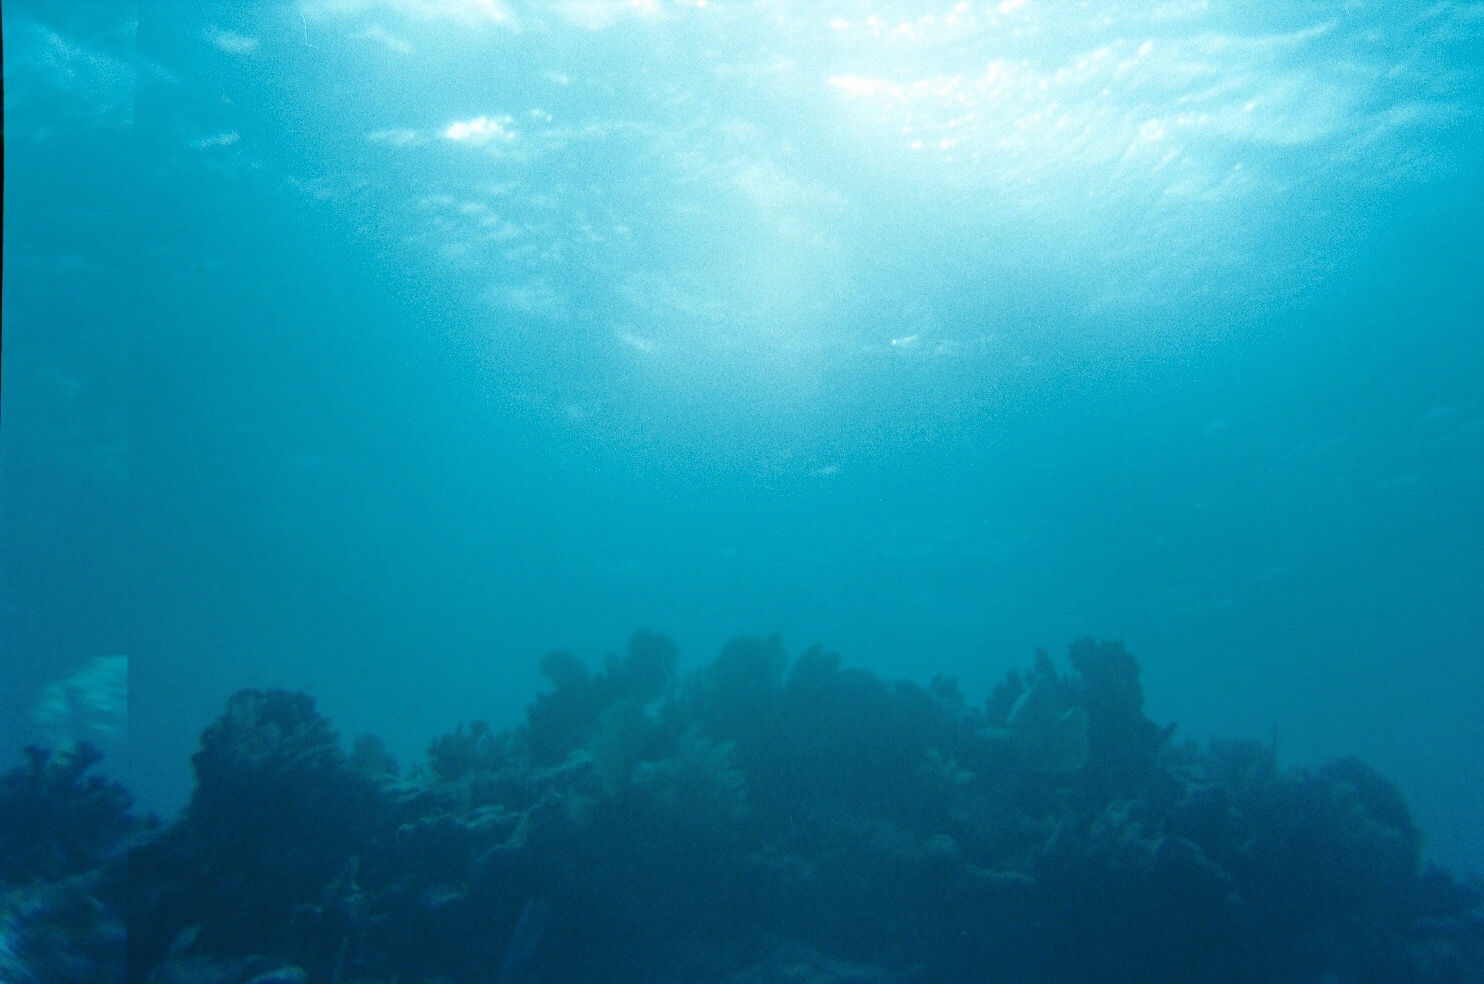 Florida reef scene